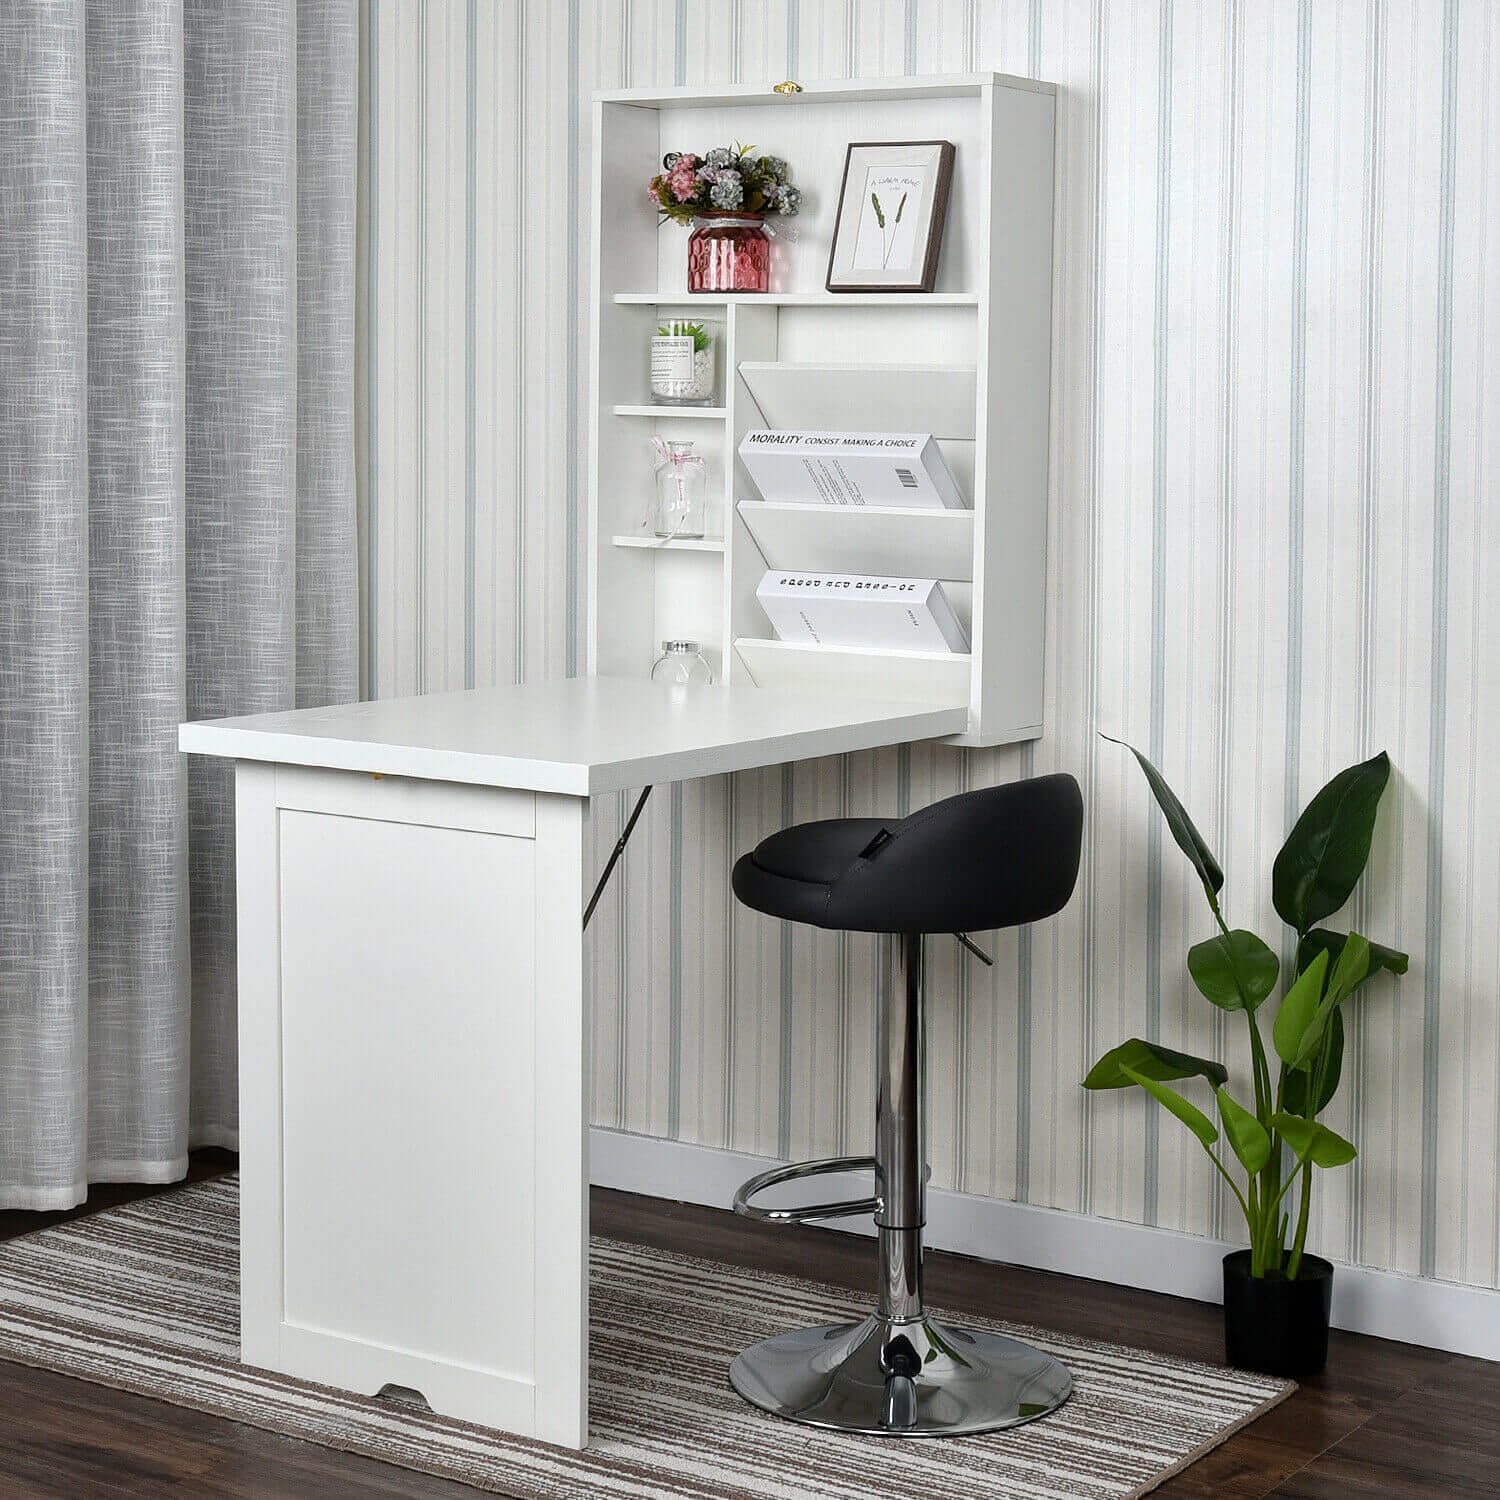 Elecwish Desk White Wall Mounted Computer Desk HW1096 for livingroom